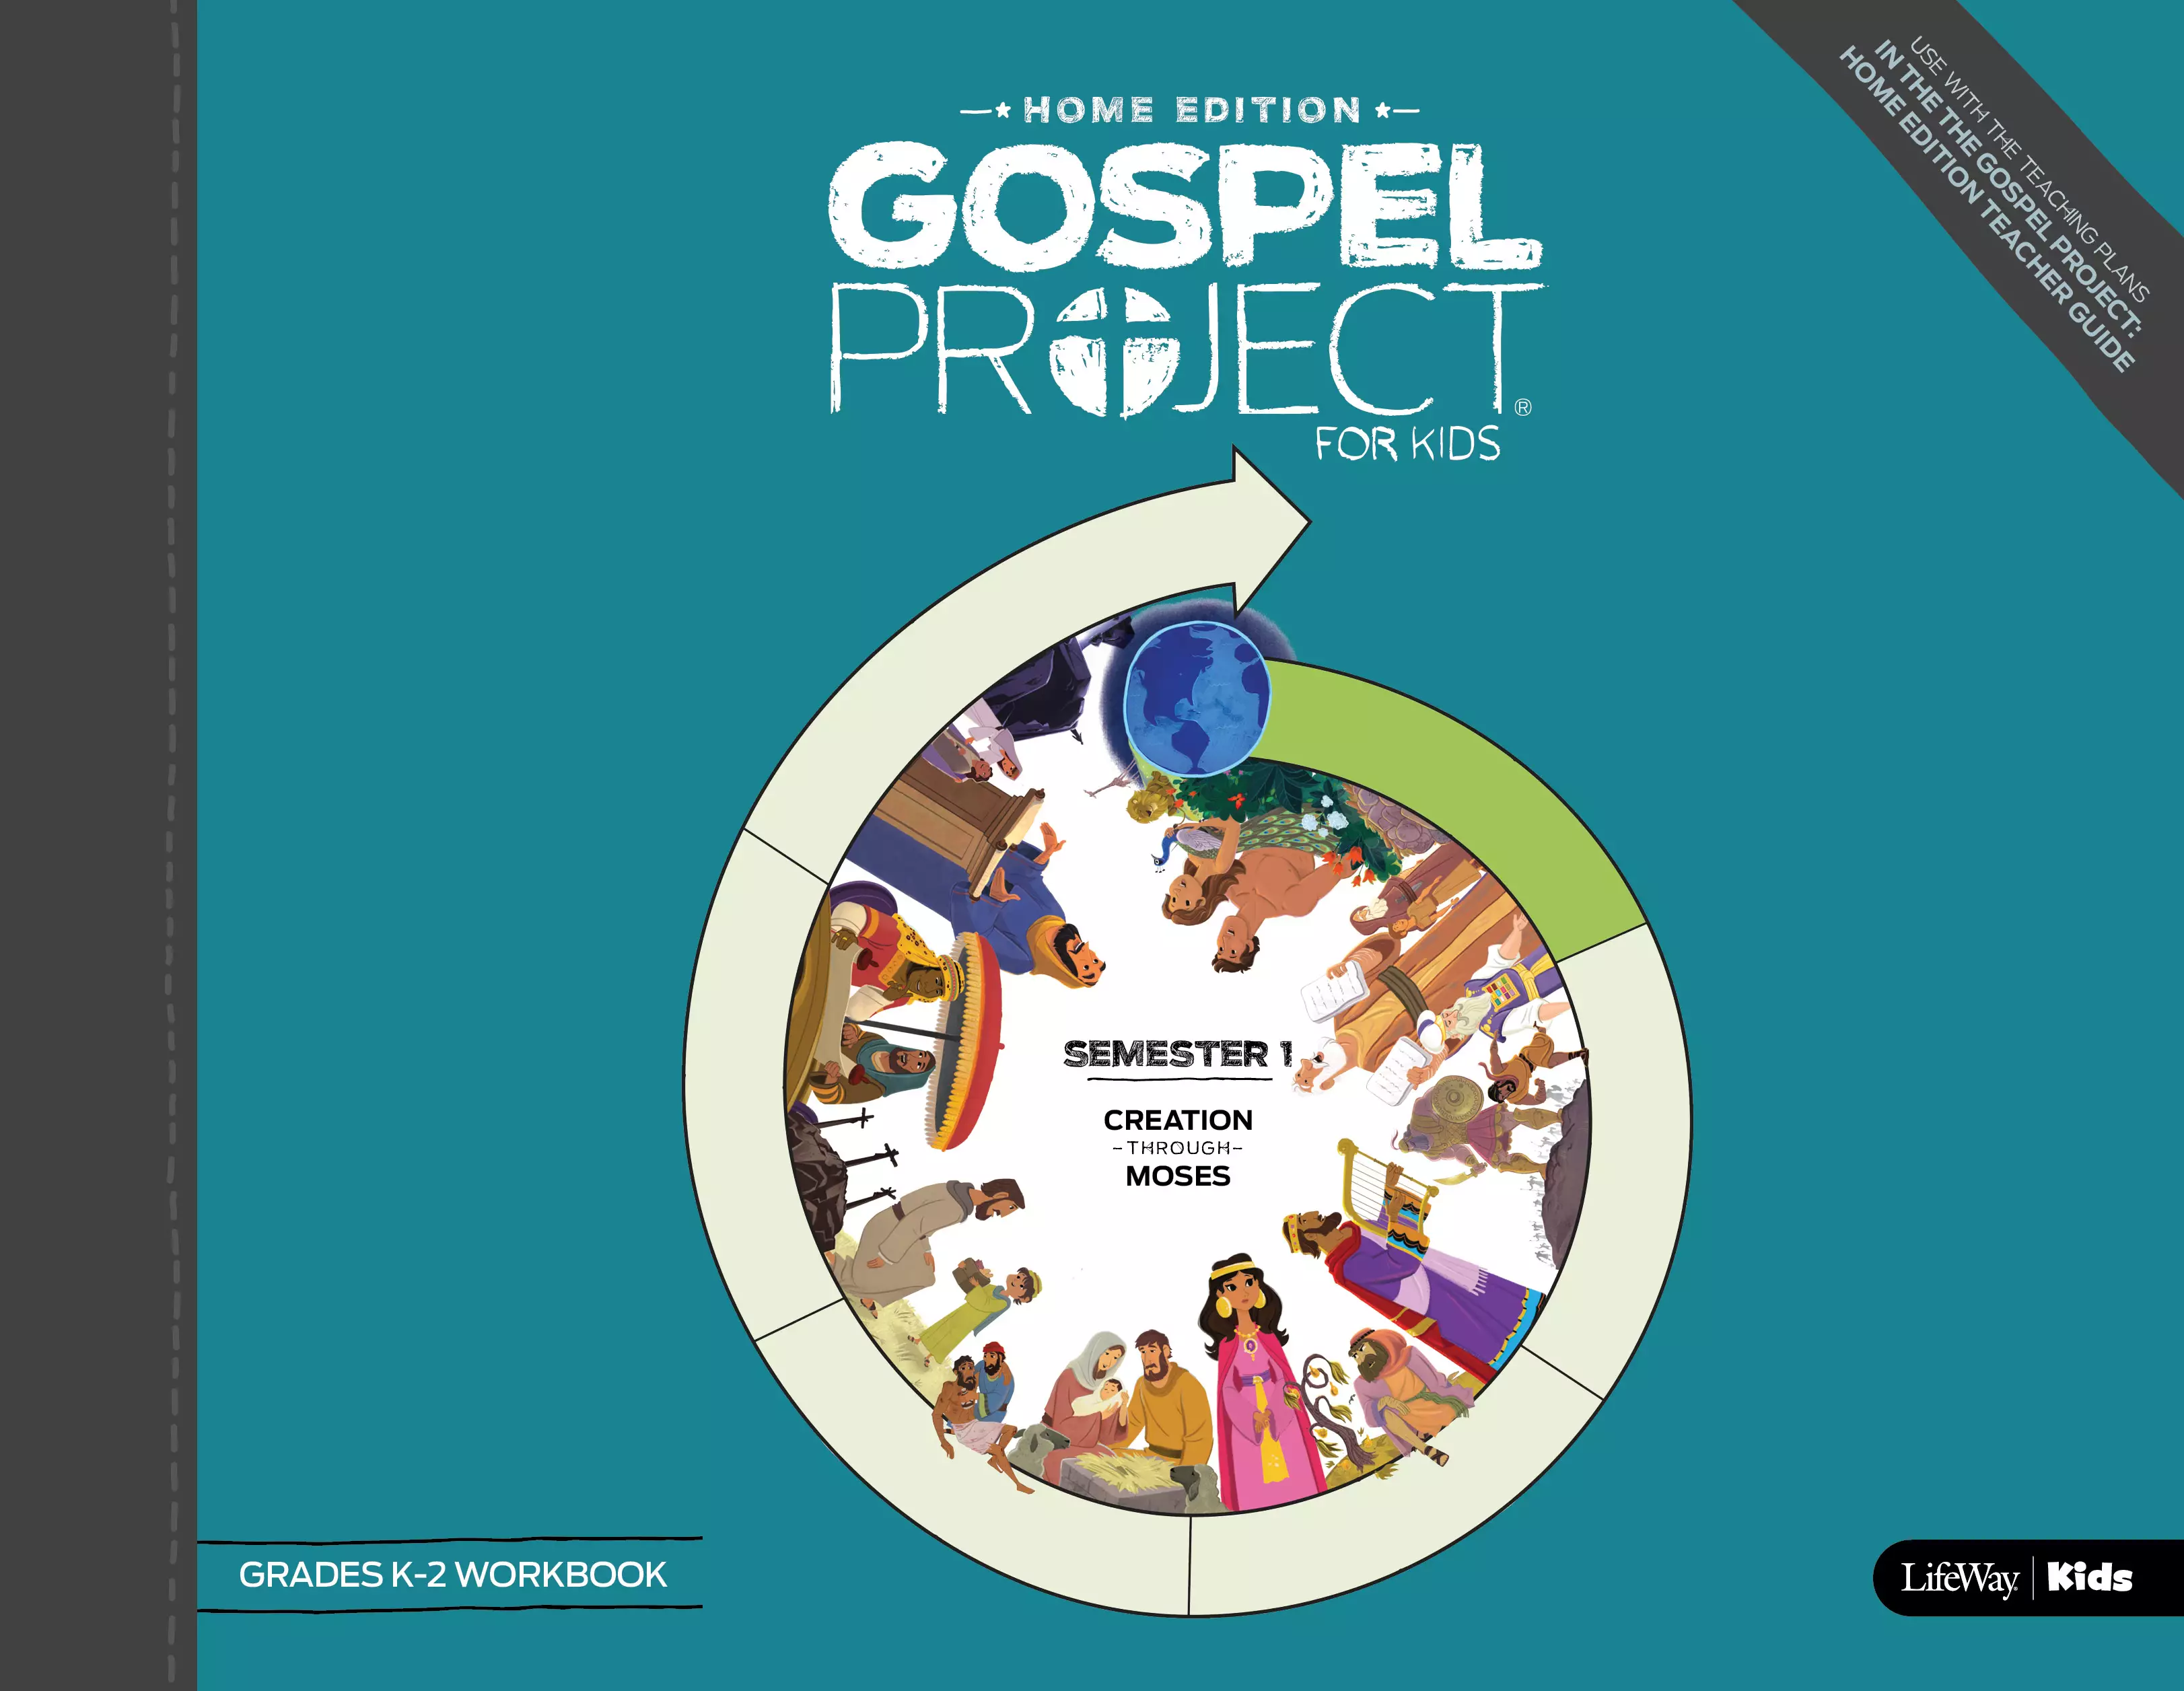 Gospel Project for Kids: Home Edition - Grades K-2 Workbook Semester 1